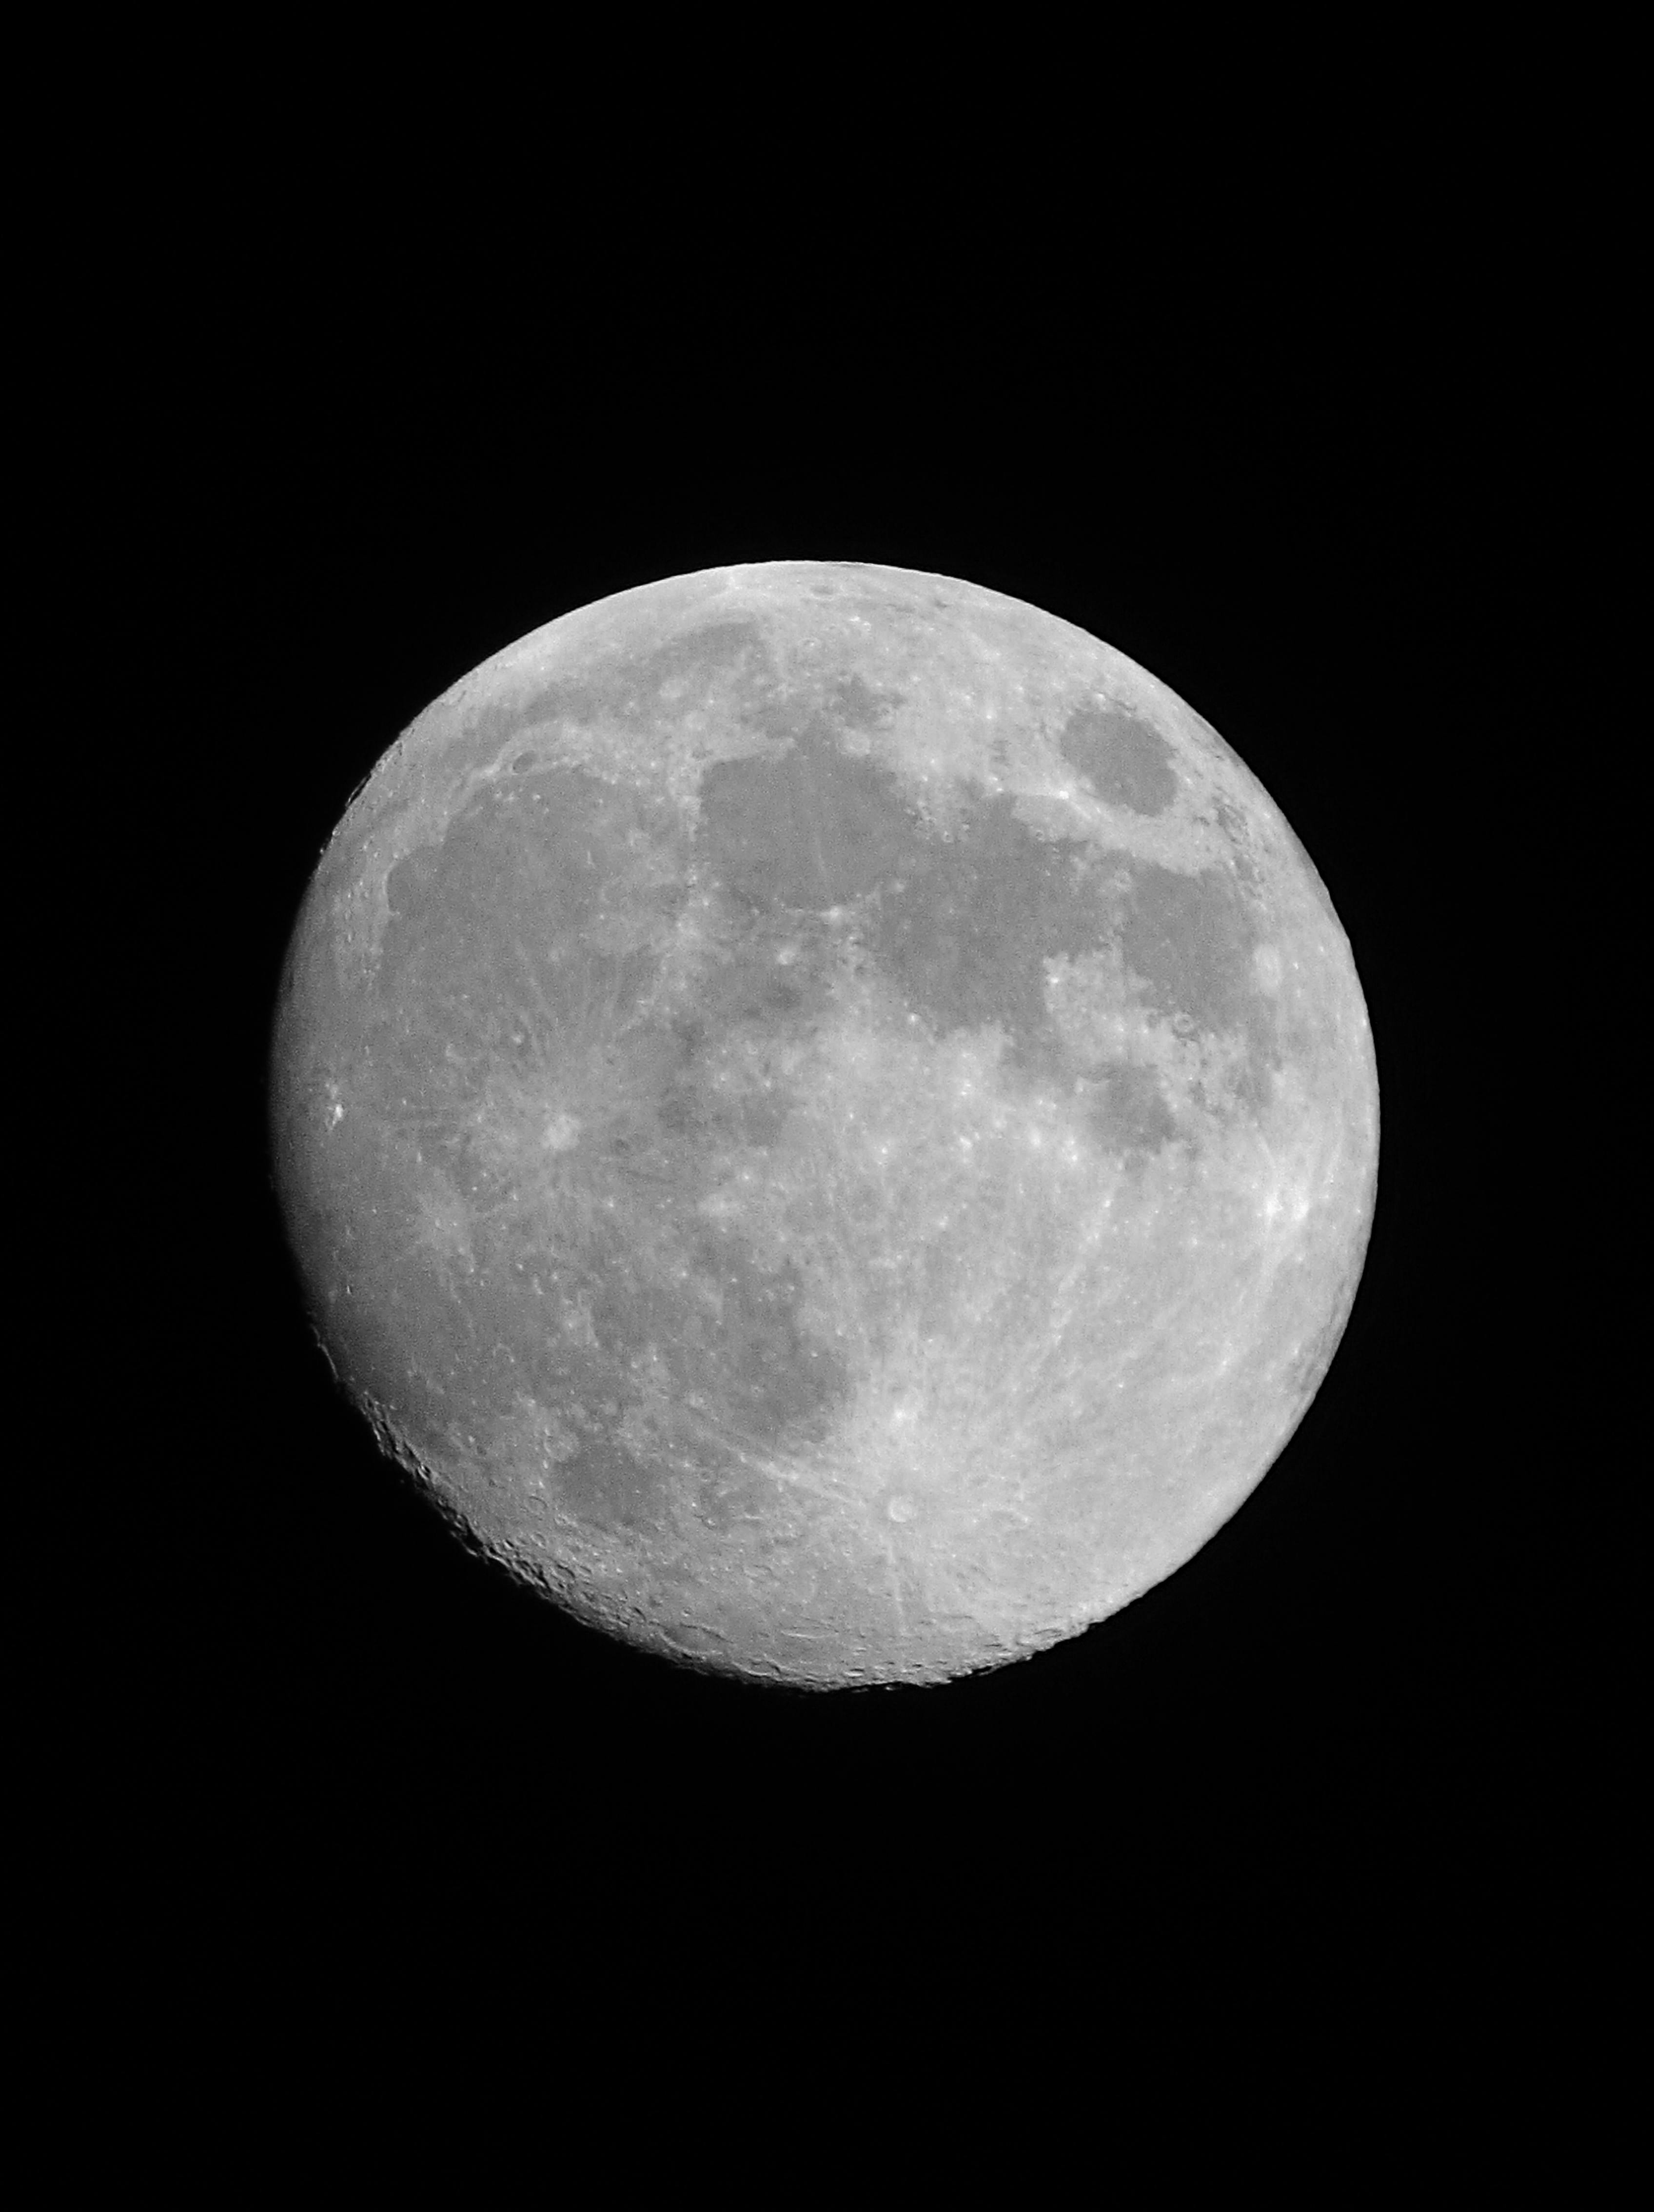 Full Moon on Black Background · Free Stock Photo